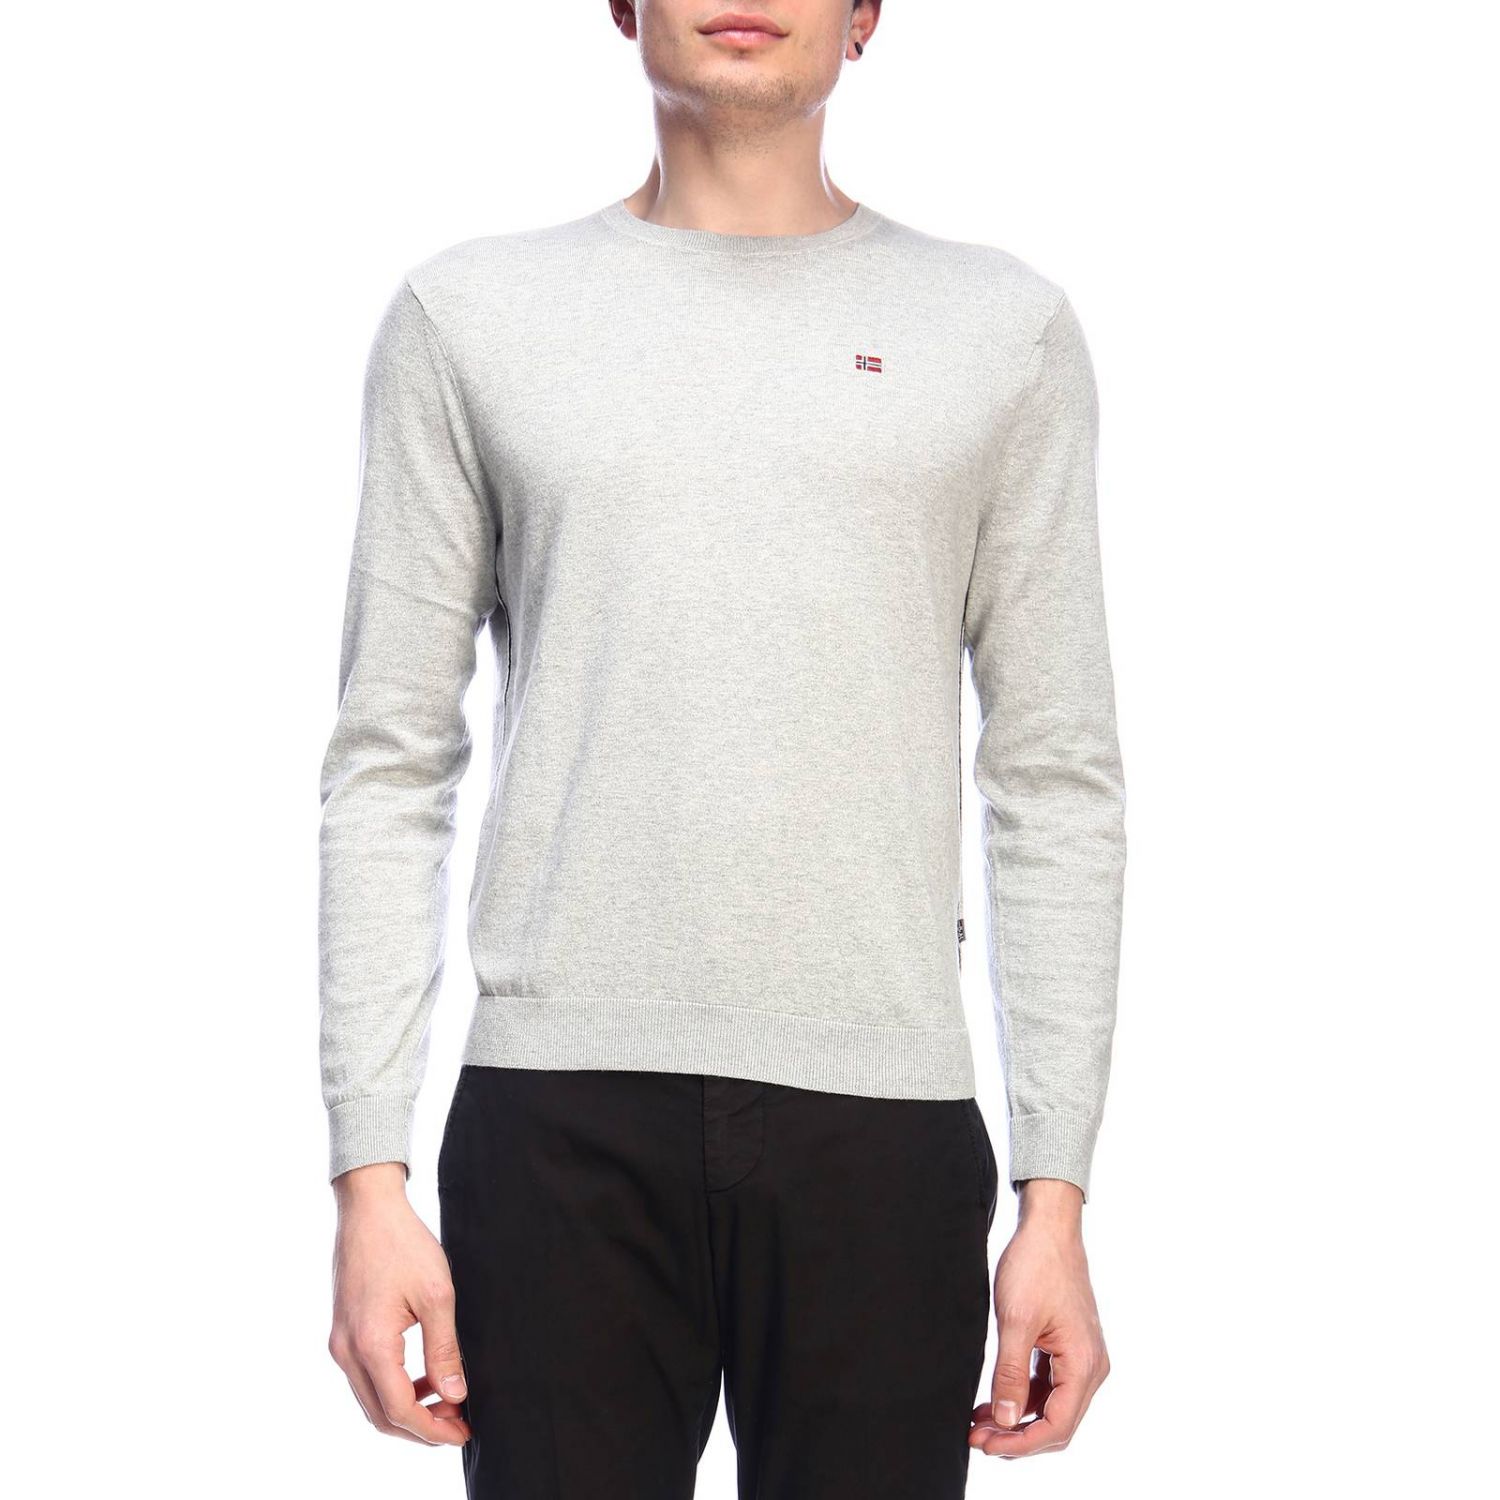 Napapijri Outlet: sweater for man - Grey | Napapijri sweater N0YHE6 ...